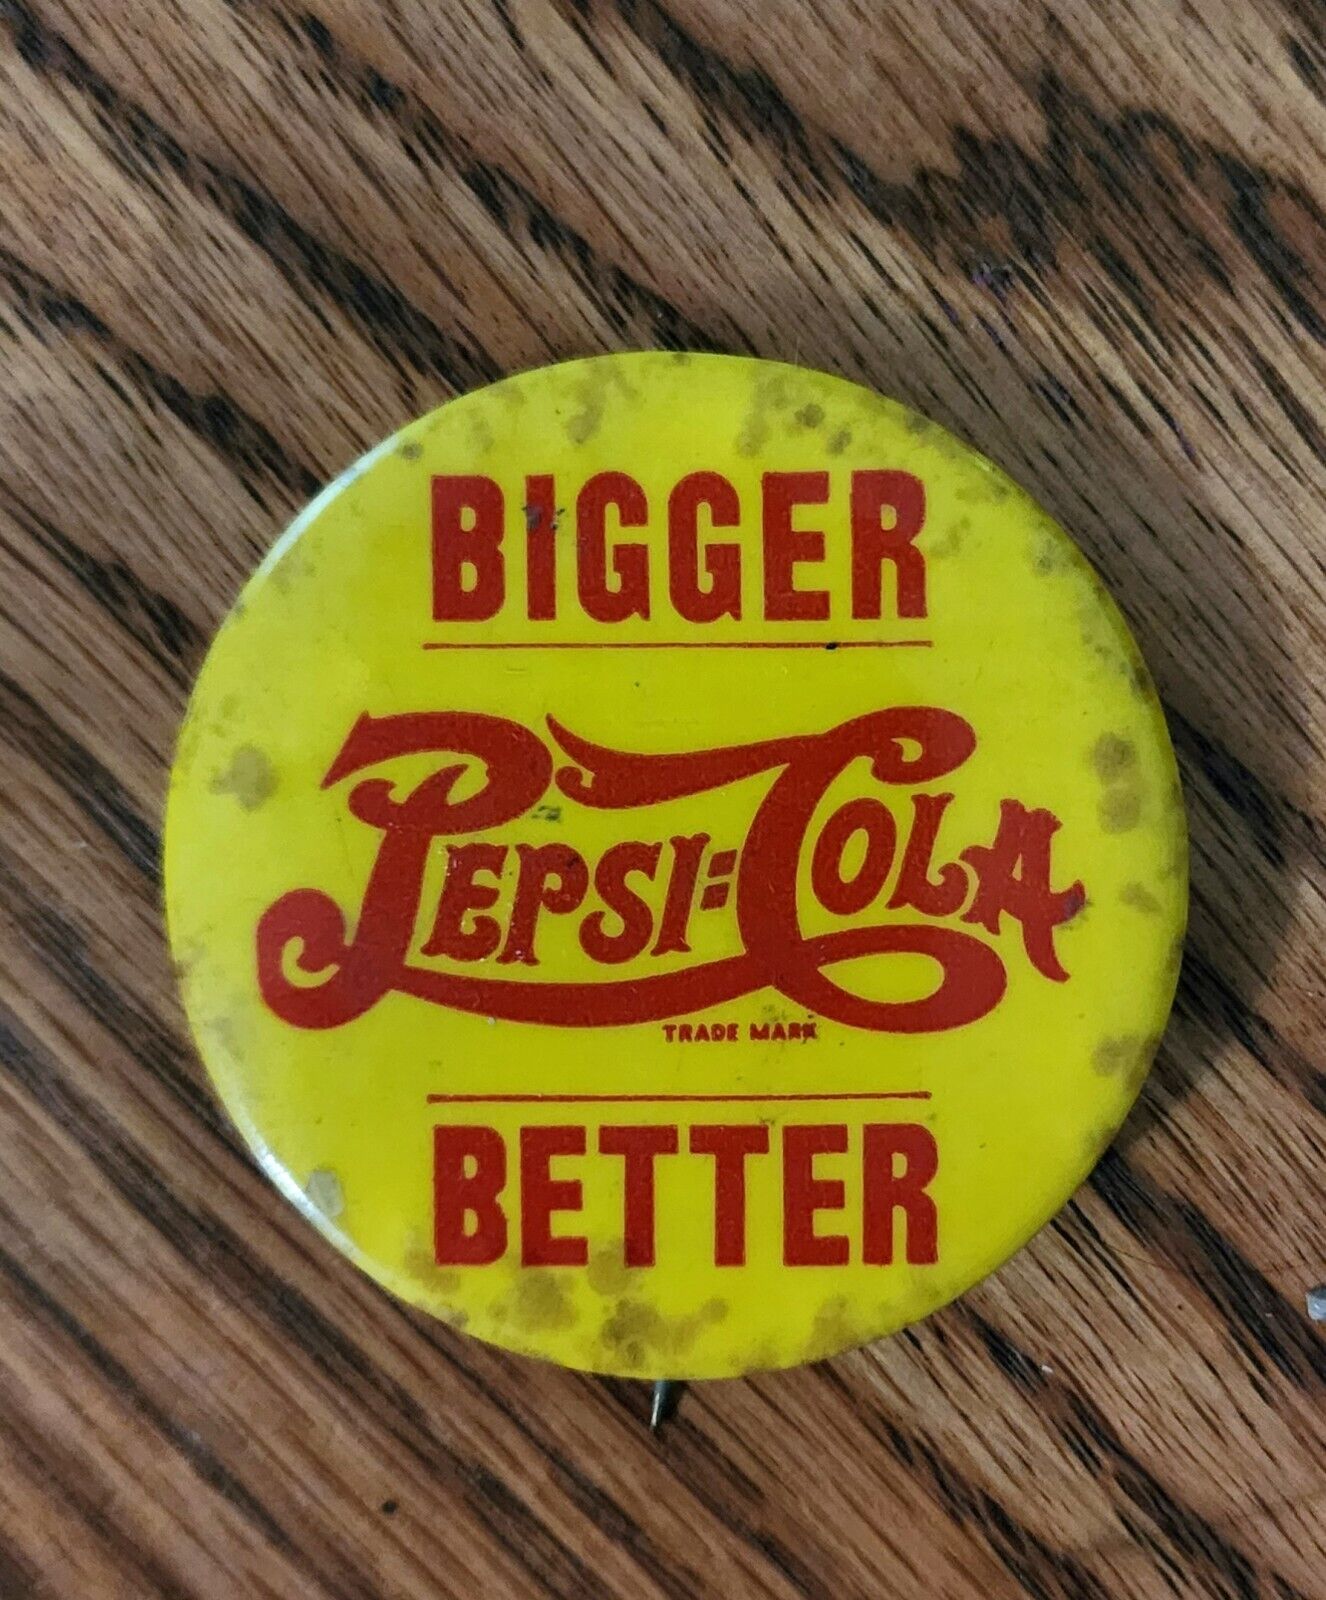 Vintage Bigger, Better Pepsi-Cola Red & Yellow Advertising Pinback Button. 